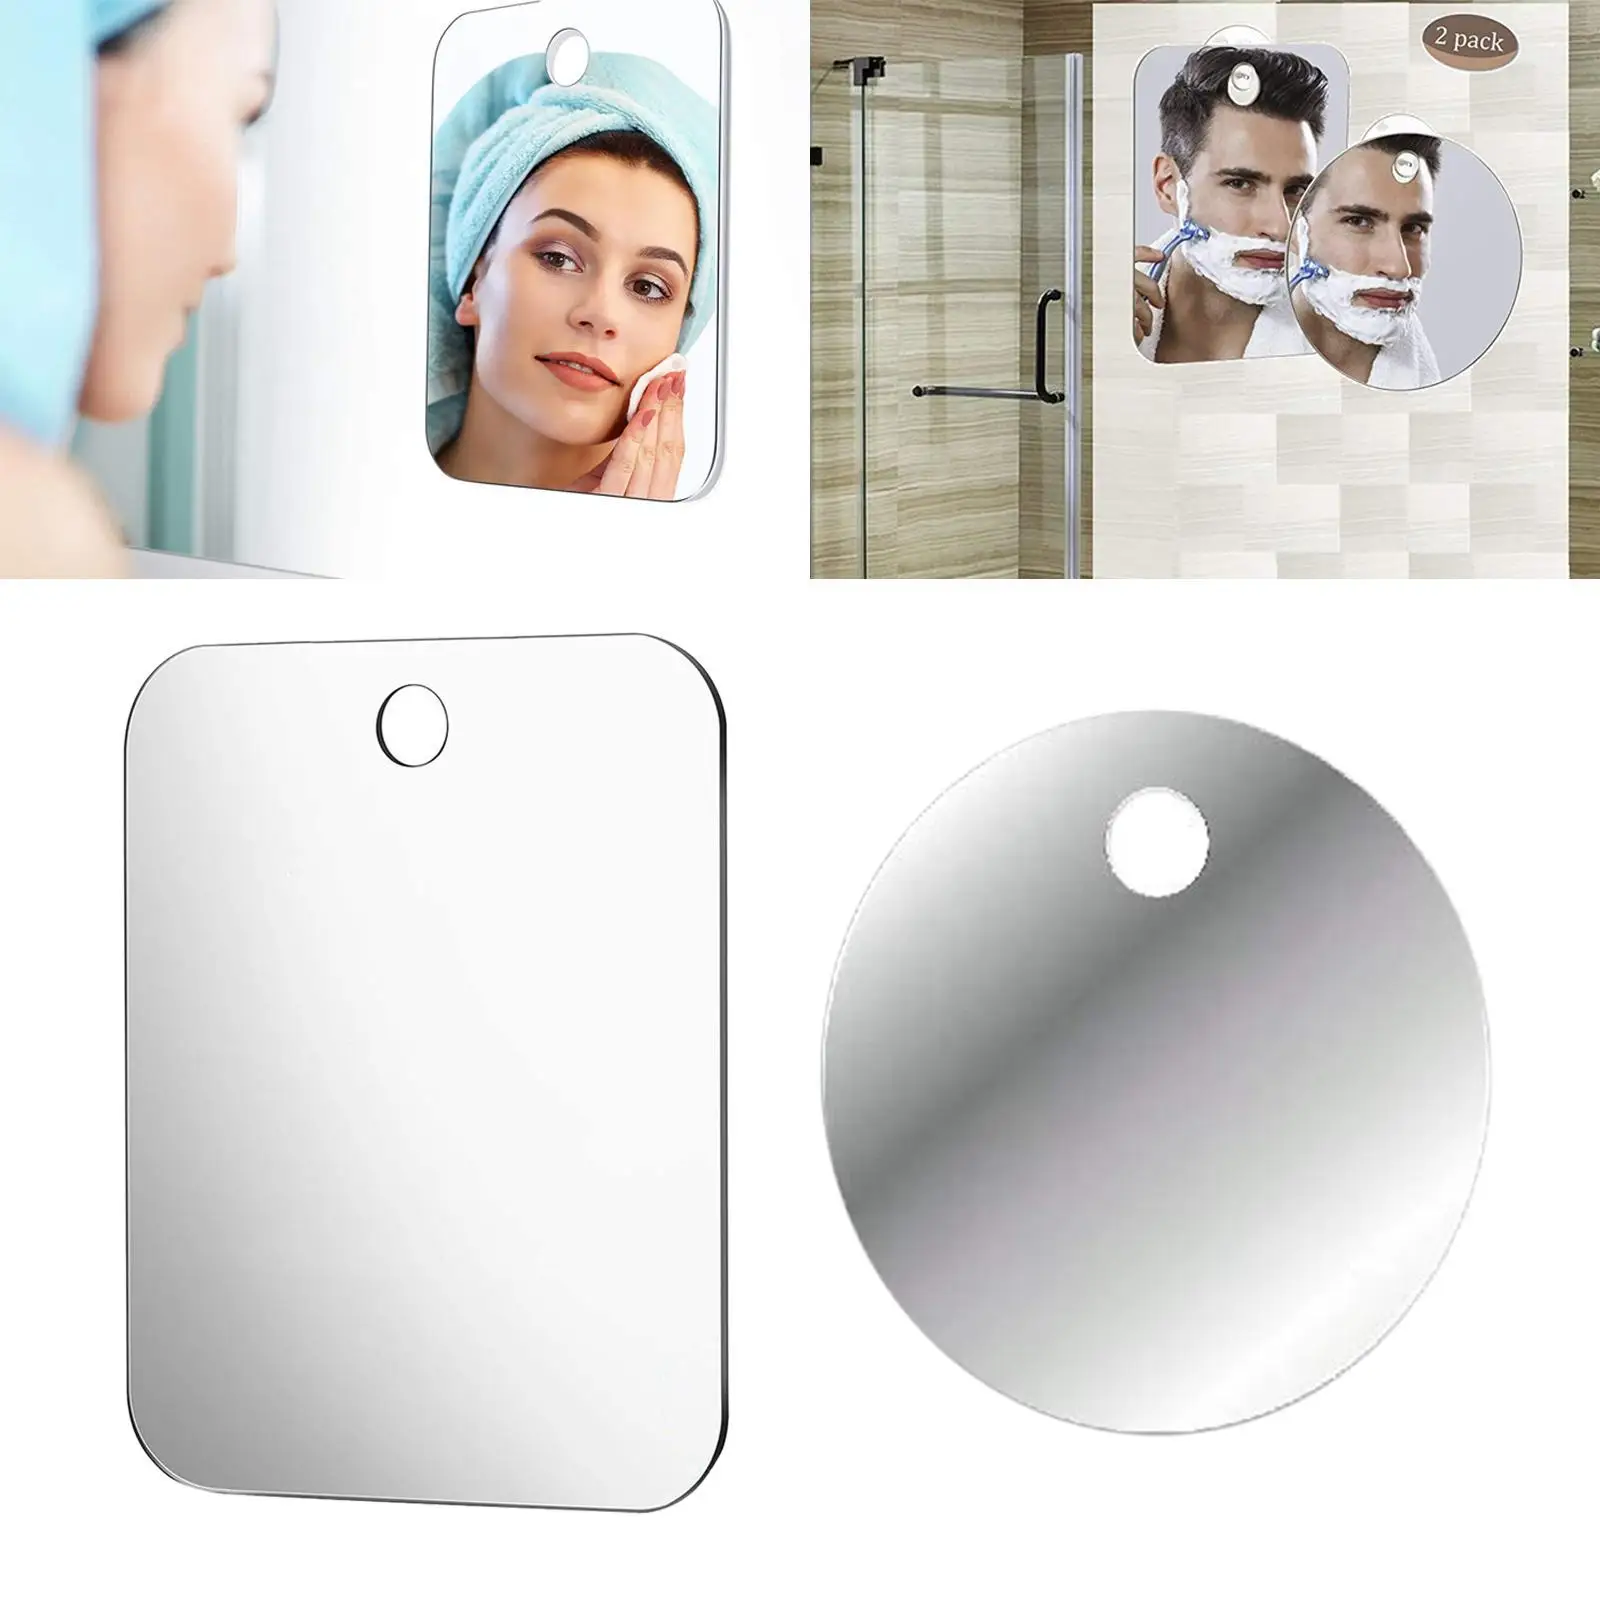  Mirror - Fogproof Shatterproof Shower Mirror - Portable Wall Hanging Shower Mirror